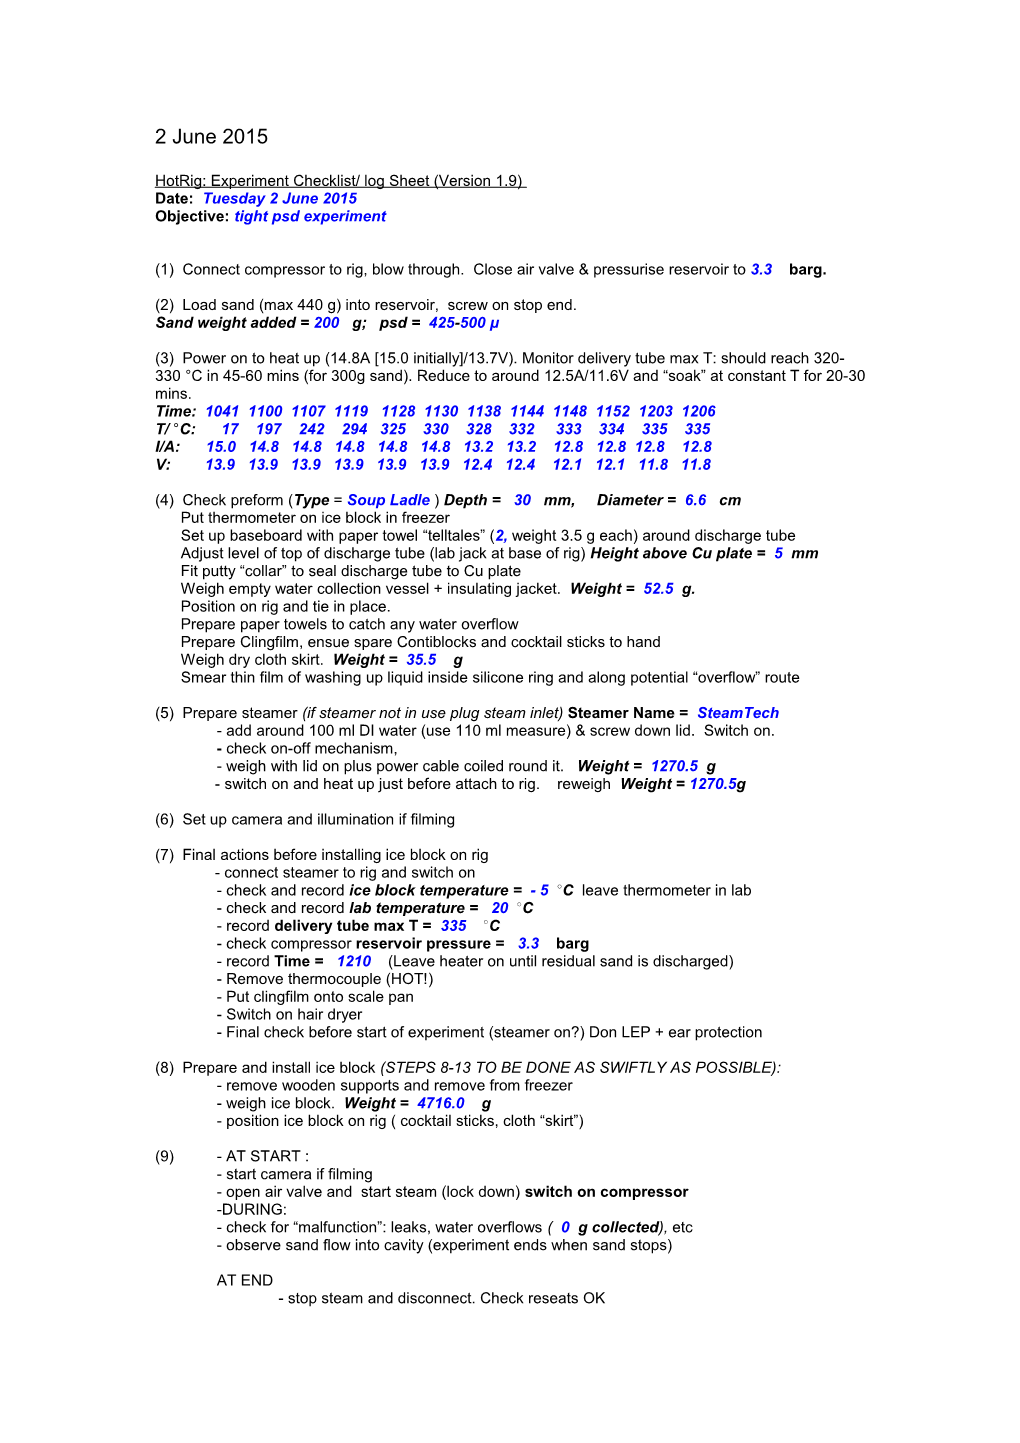 Hotrig: Experiment Checklist/ Log Sheet (Version 1.9)